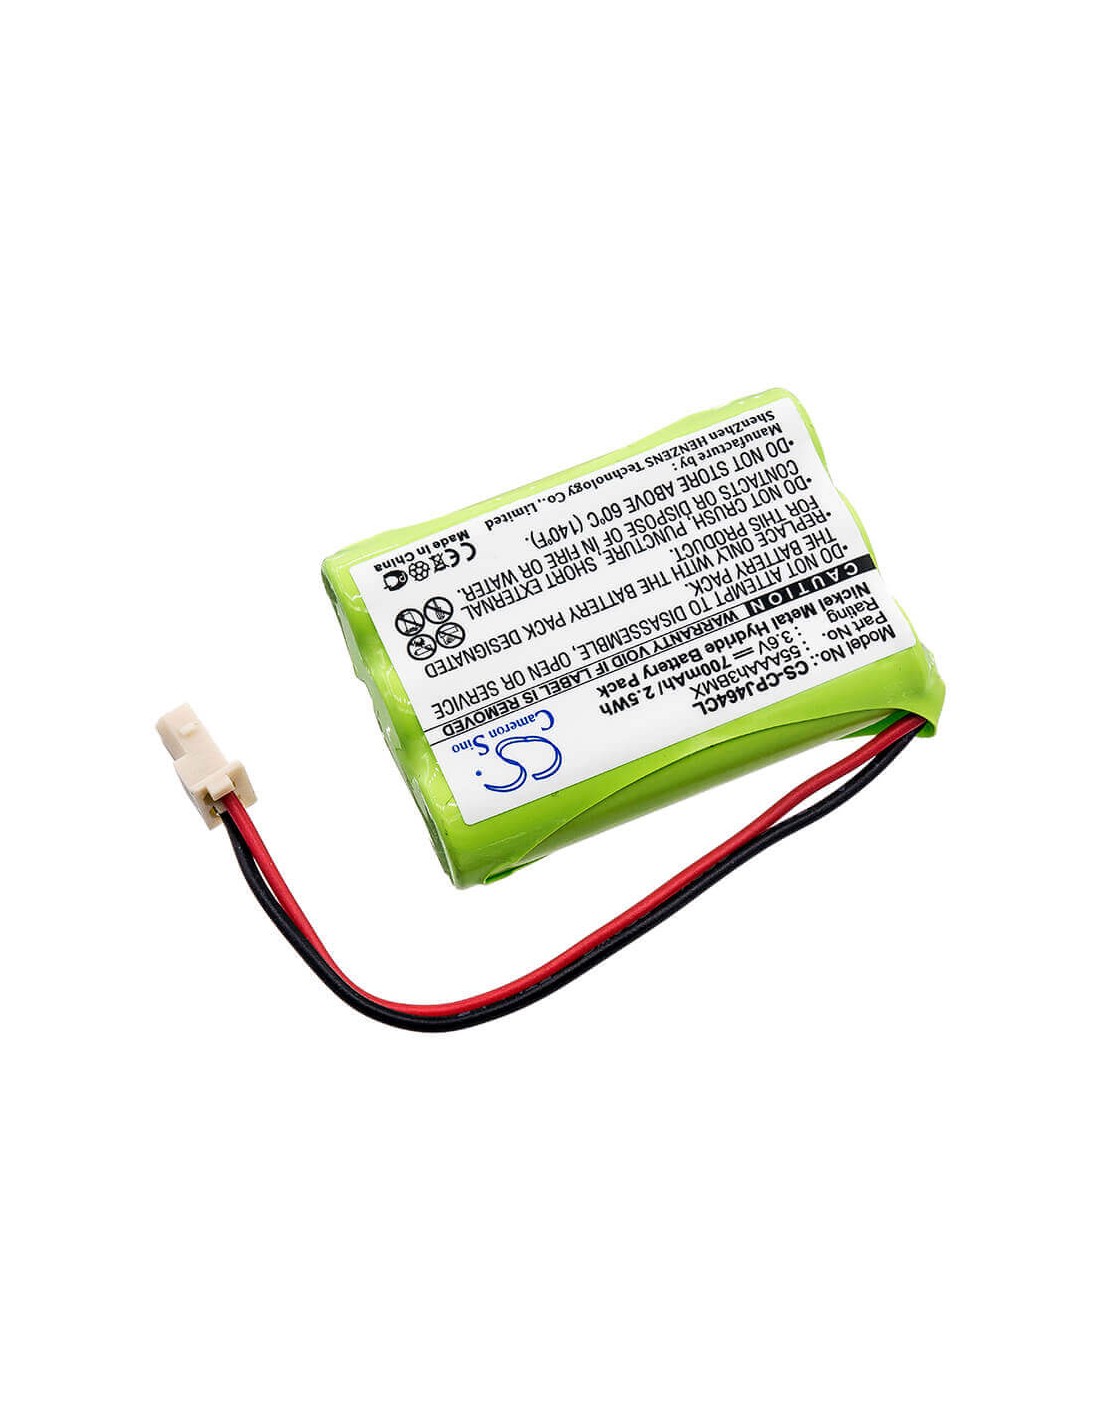 Battery for Dualphone, Rtx3045 Voip-skype 3.6V, 700mAh - 2.52Wh